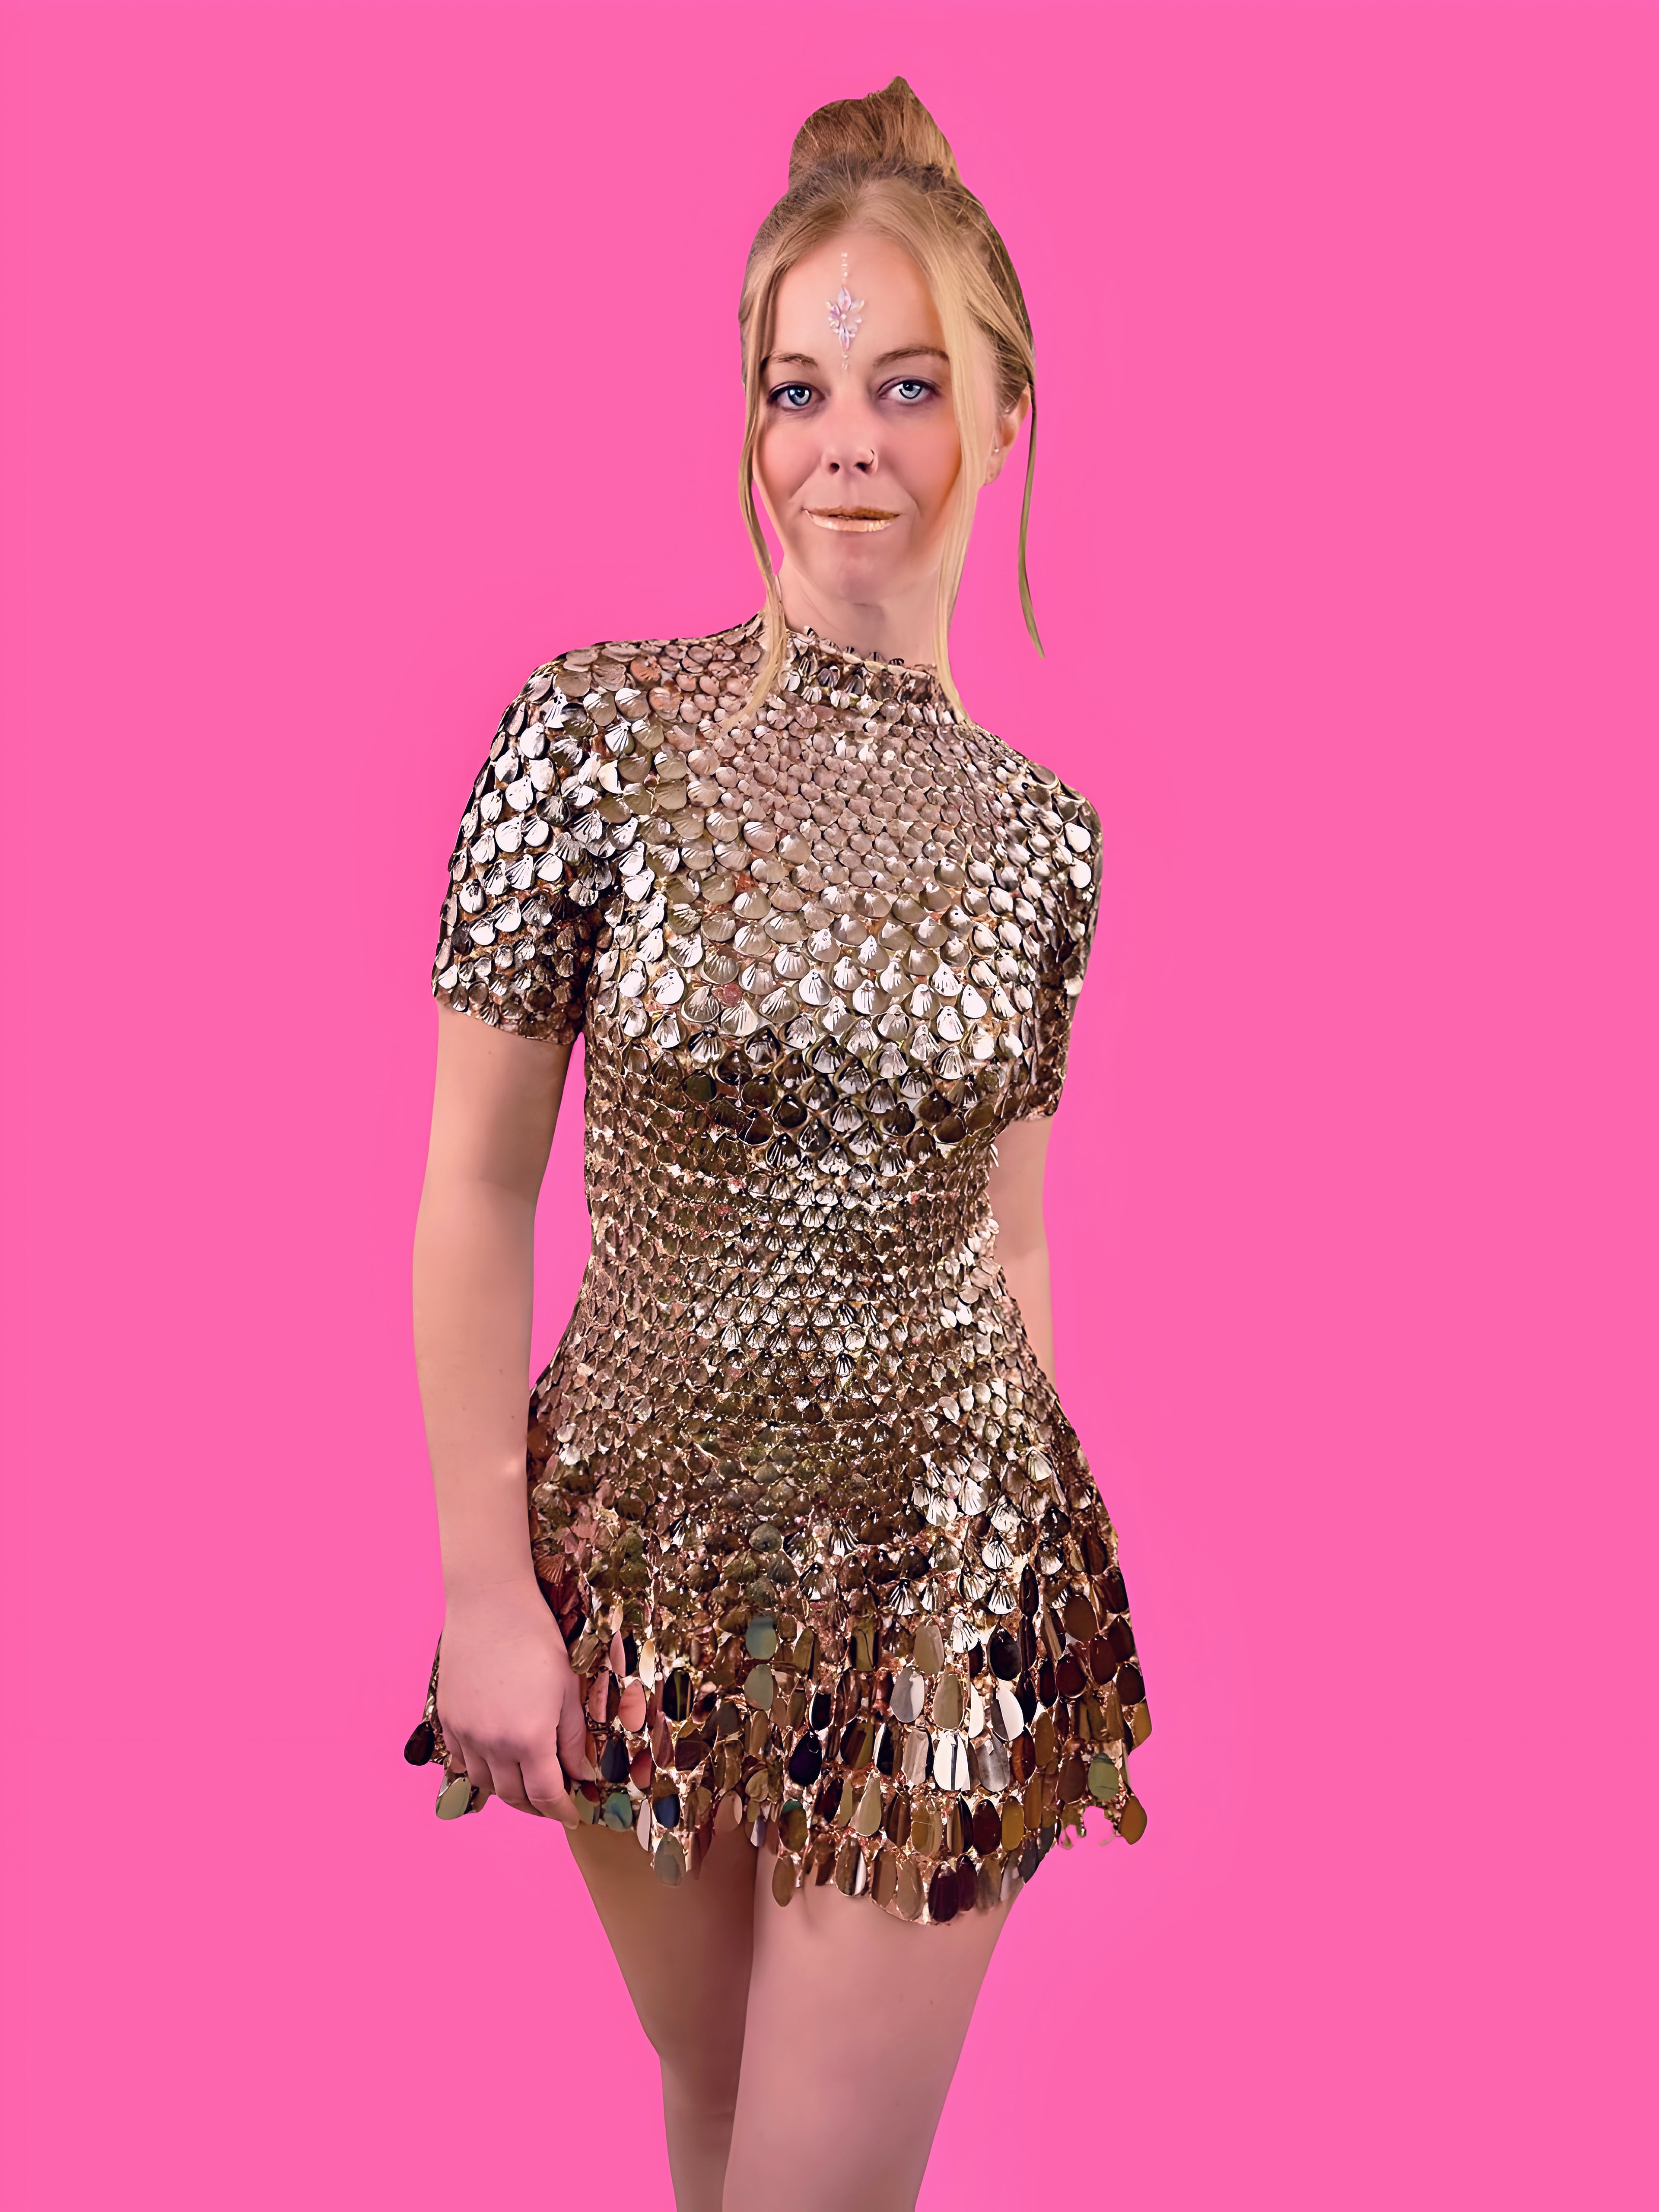 Helen Rose Gold Party Dress - Sequin Bodysuit / Womens Burning Man Outfit NYE Performance Sparkle Club Festival / Metallic Rave Seashells